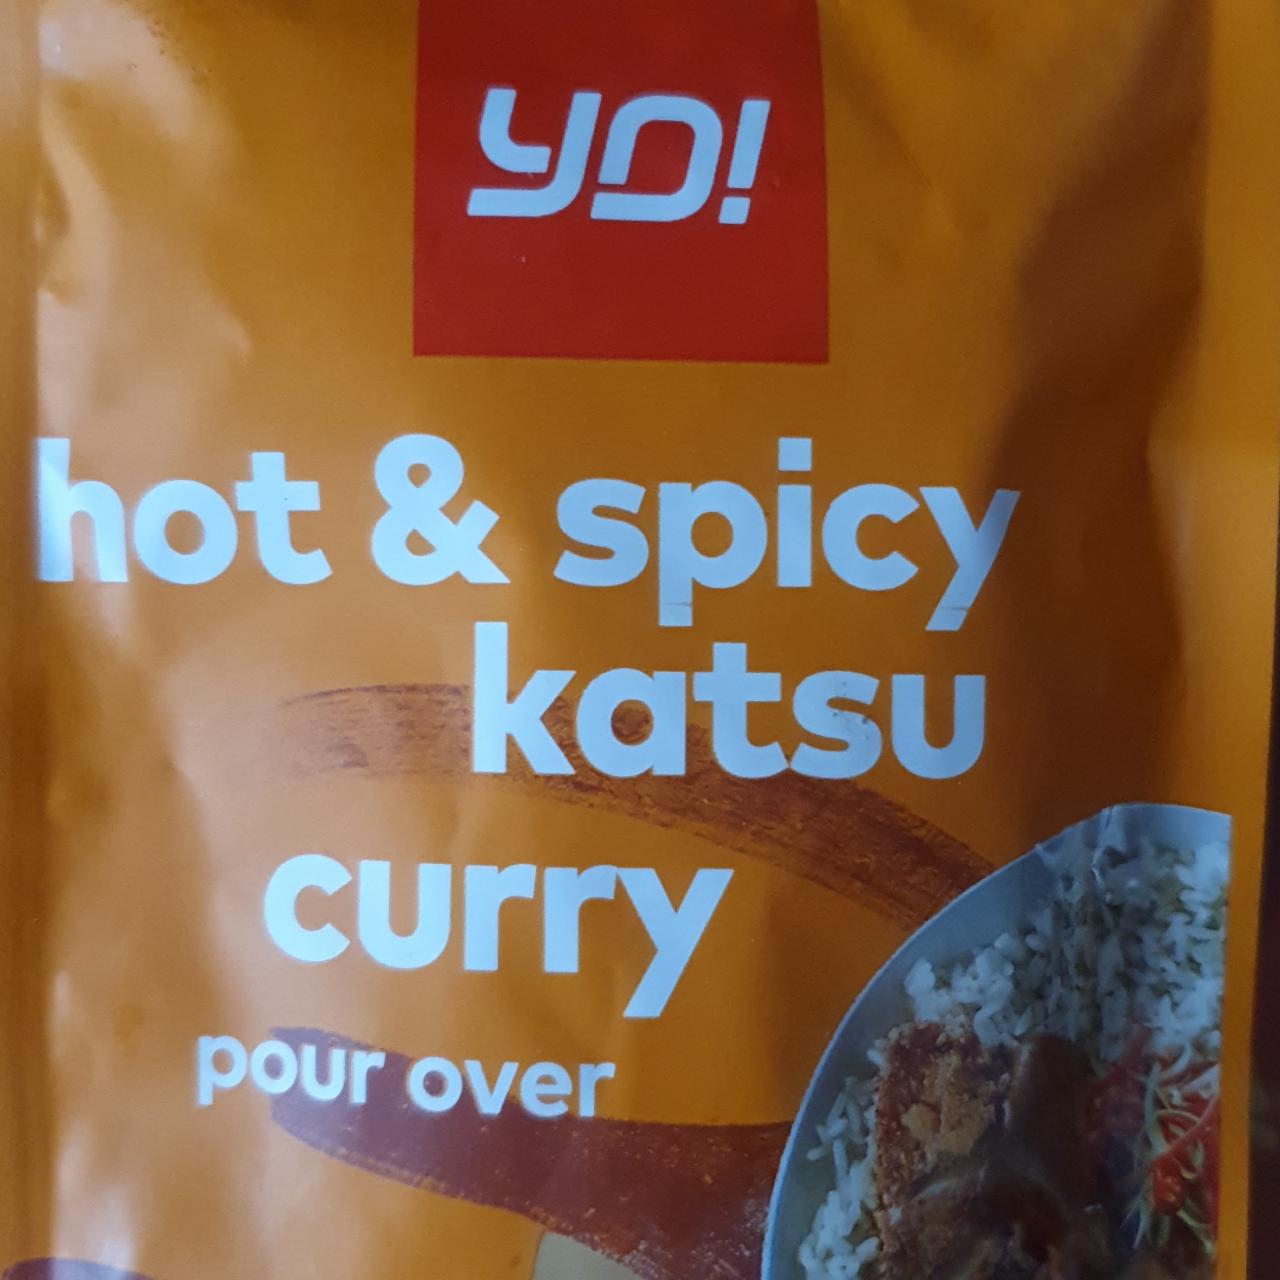 Fotografie - Hot & spicy katsu curry pour over Yo!